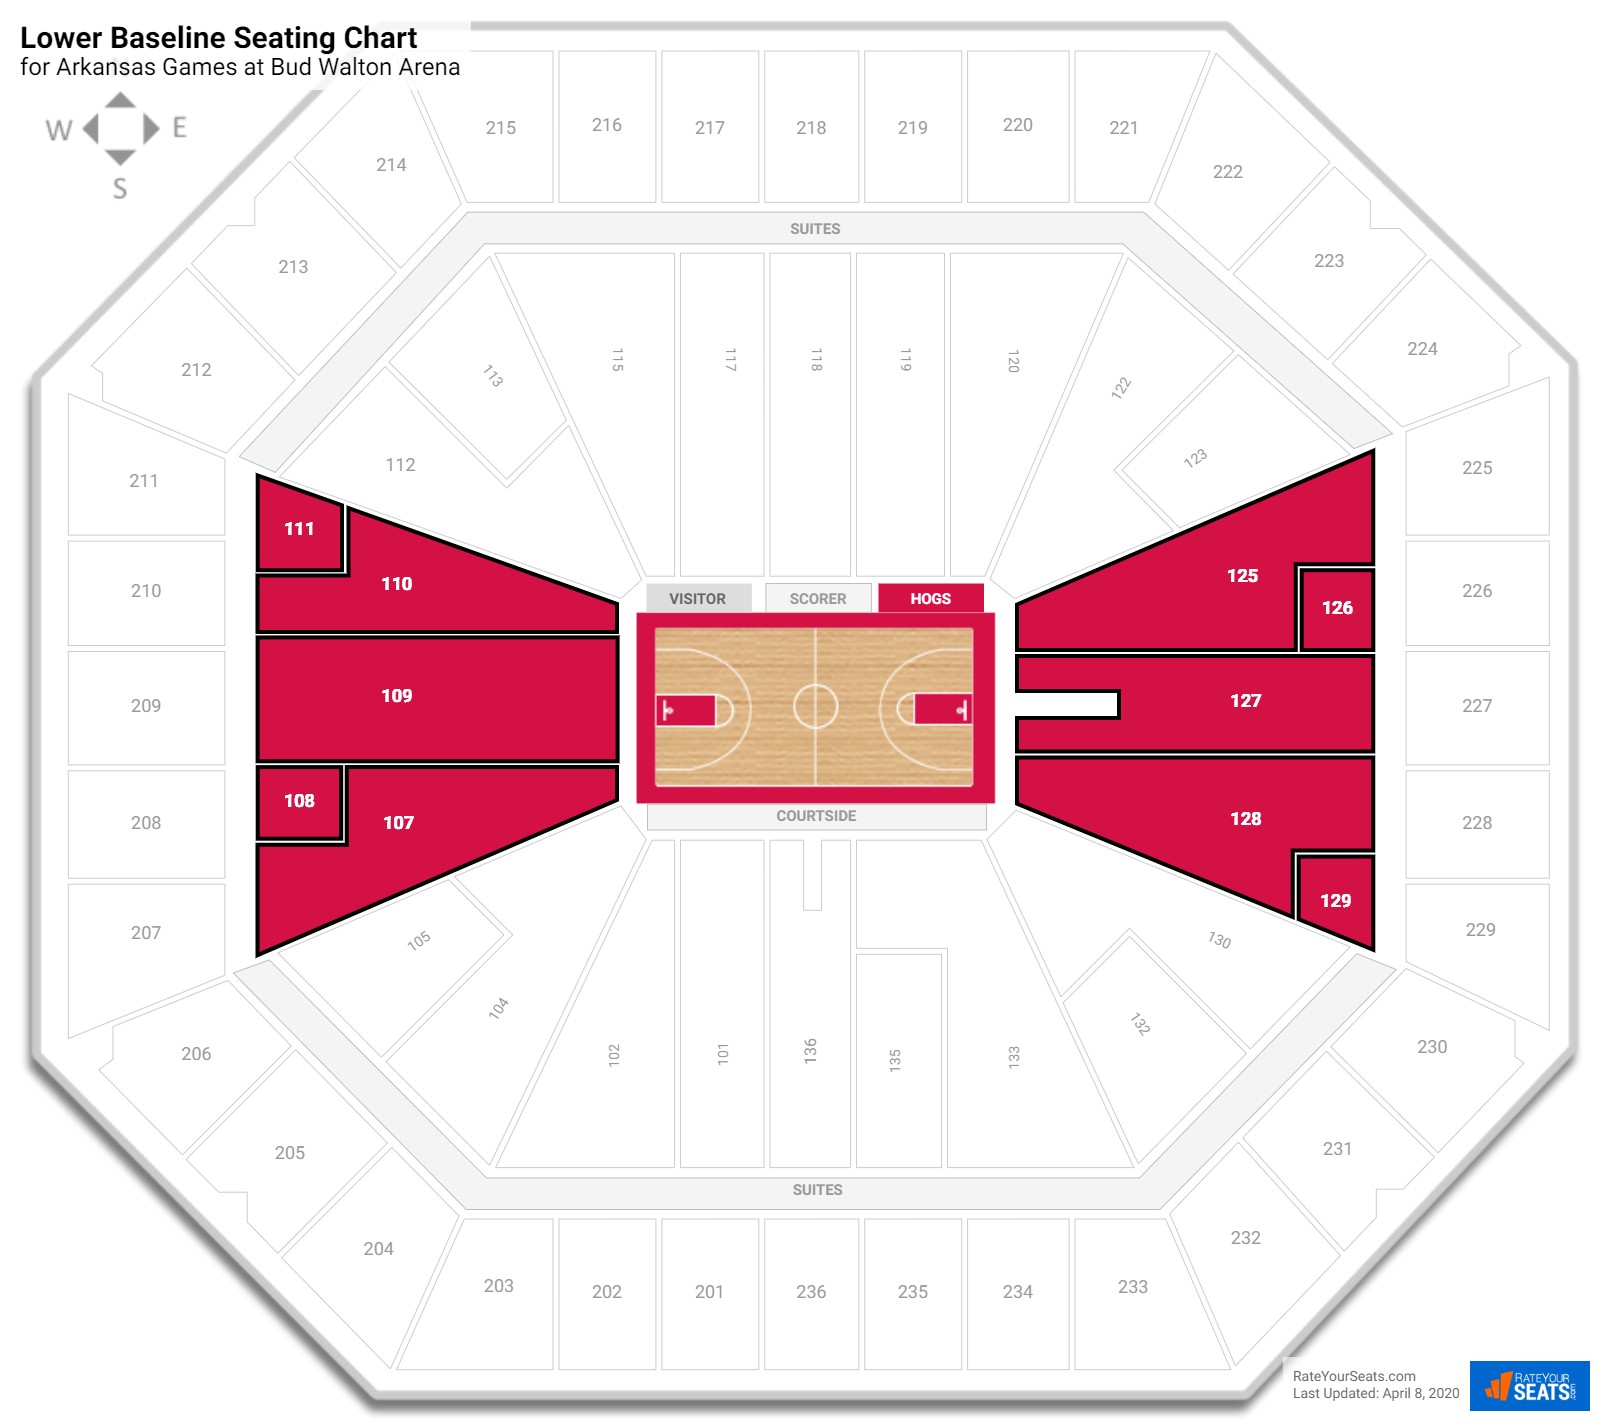 Bud Walton Arena (Arkansas) Seating Guide - RateYourSeats.com